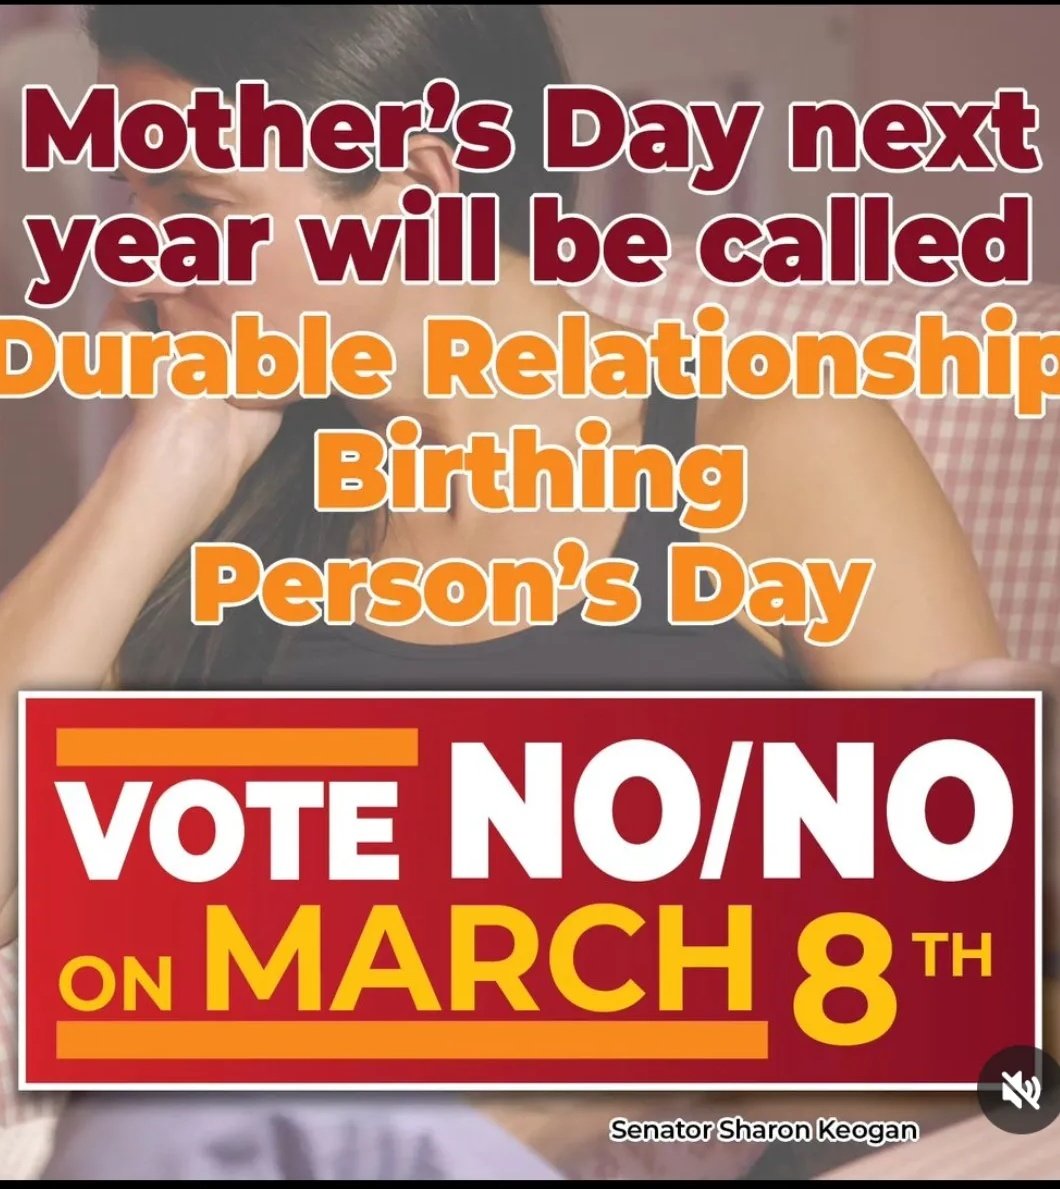 #HELLNO
#senatorsharonkeogan
#EIRE #mothers #woman #herchoice #votenil #votenomarch8th #internationalwomansday #Ireland